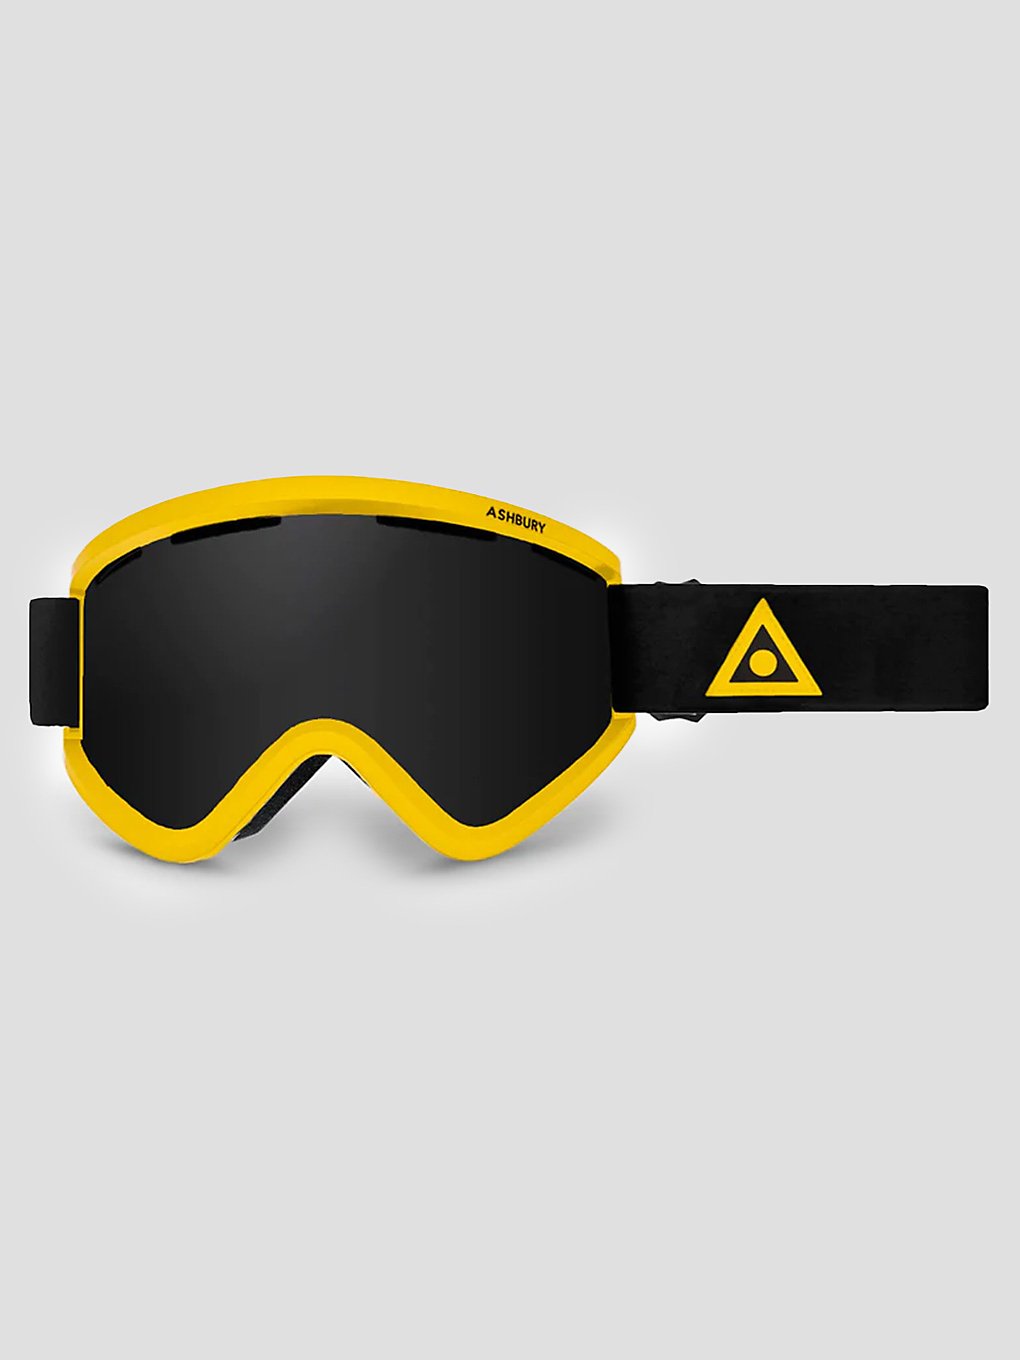 Ashbury Blackbird Gold Triangle (+Bonus Lens) Goggle dark smoke+yellow kaufen